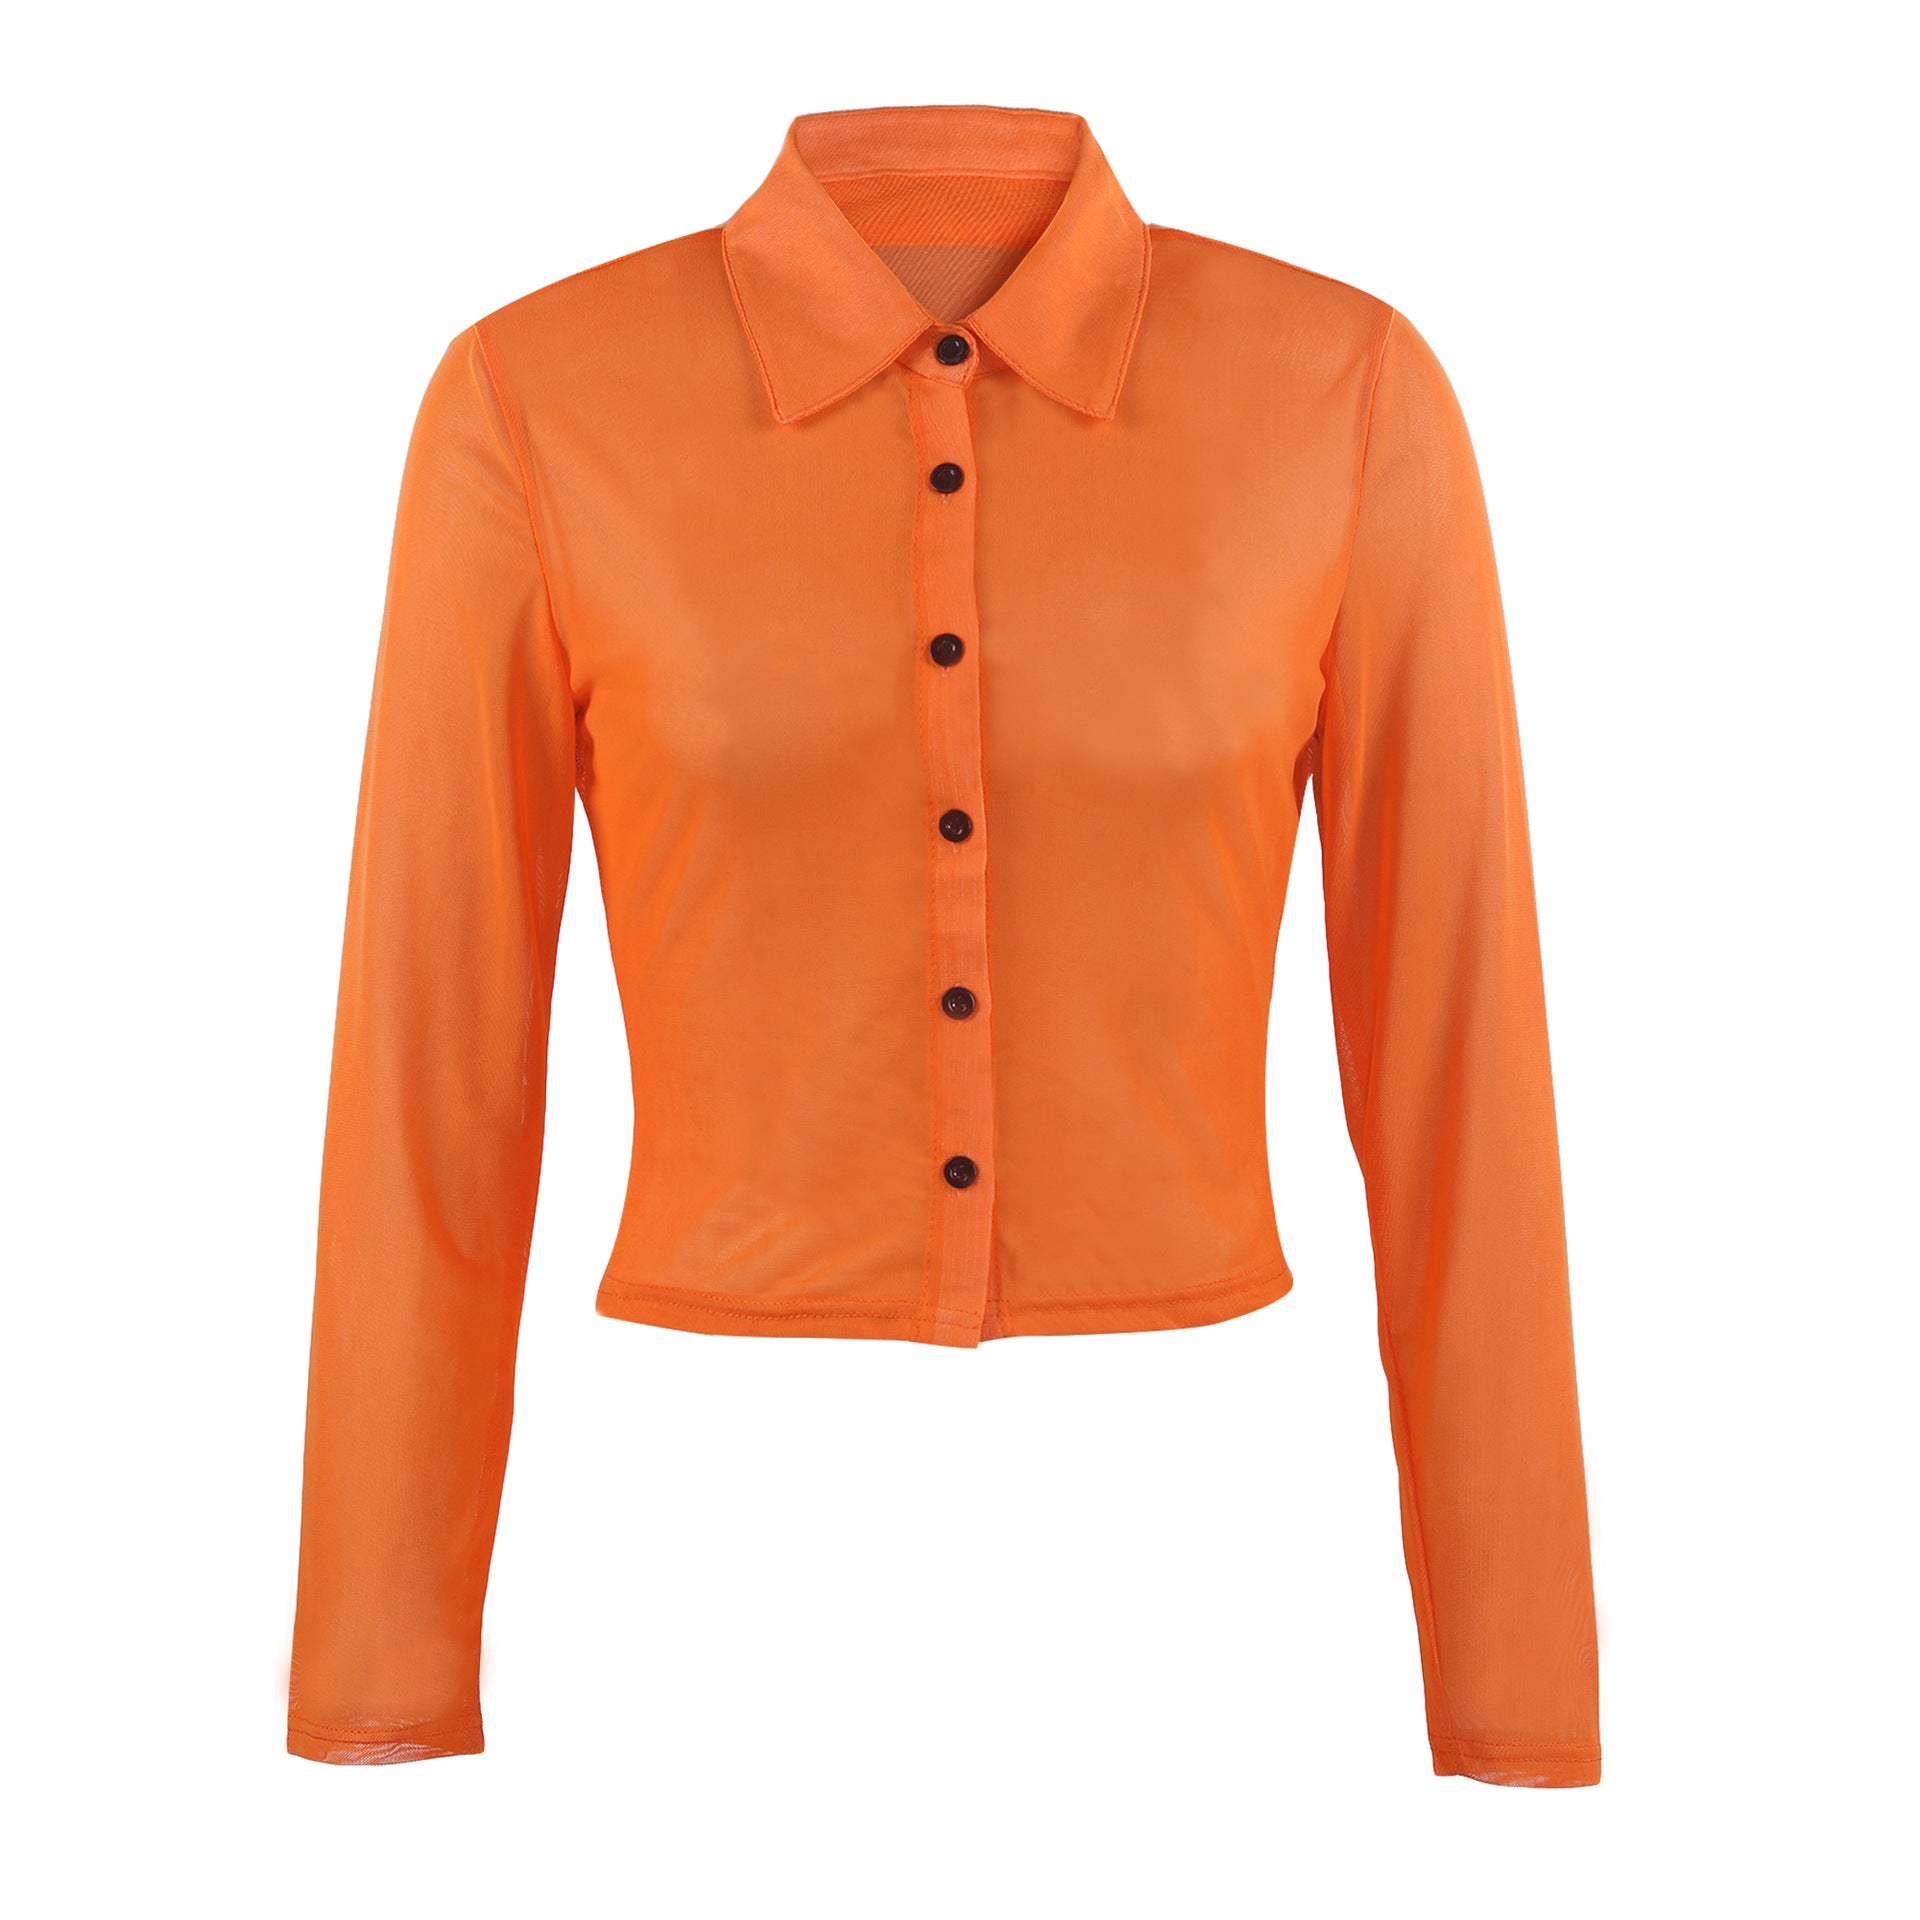 Fashion Women Sexy Shirt Tops-Shirts & Tops-Orange-S-Free Shipping at meselling99